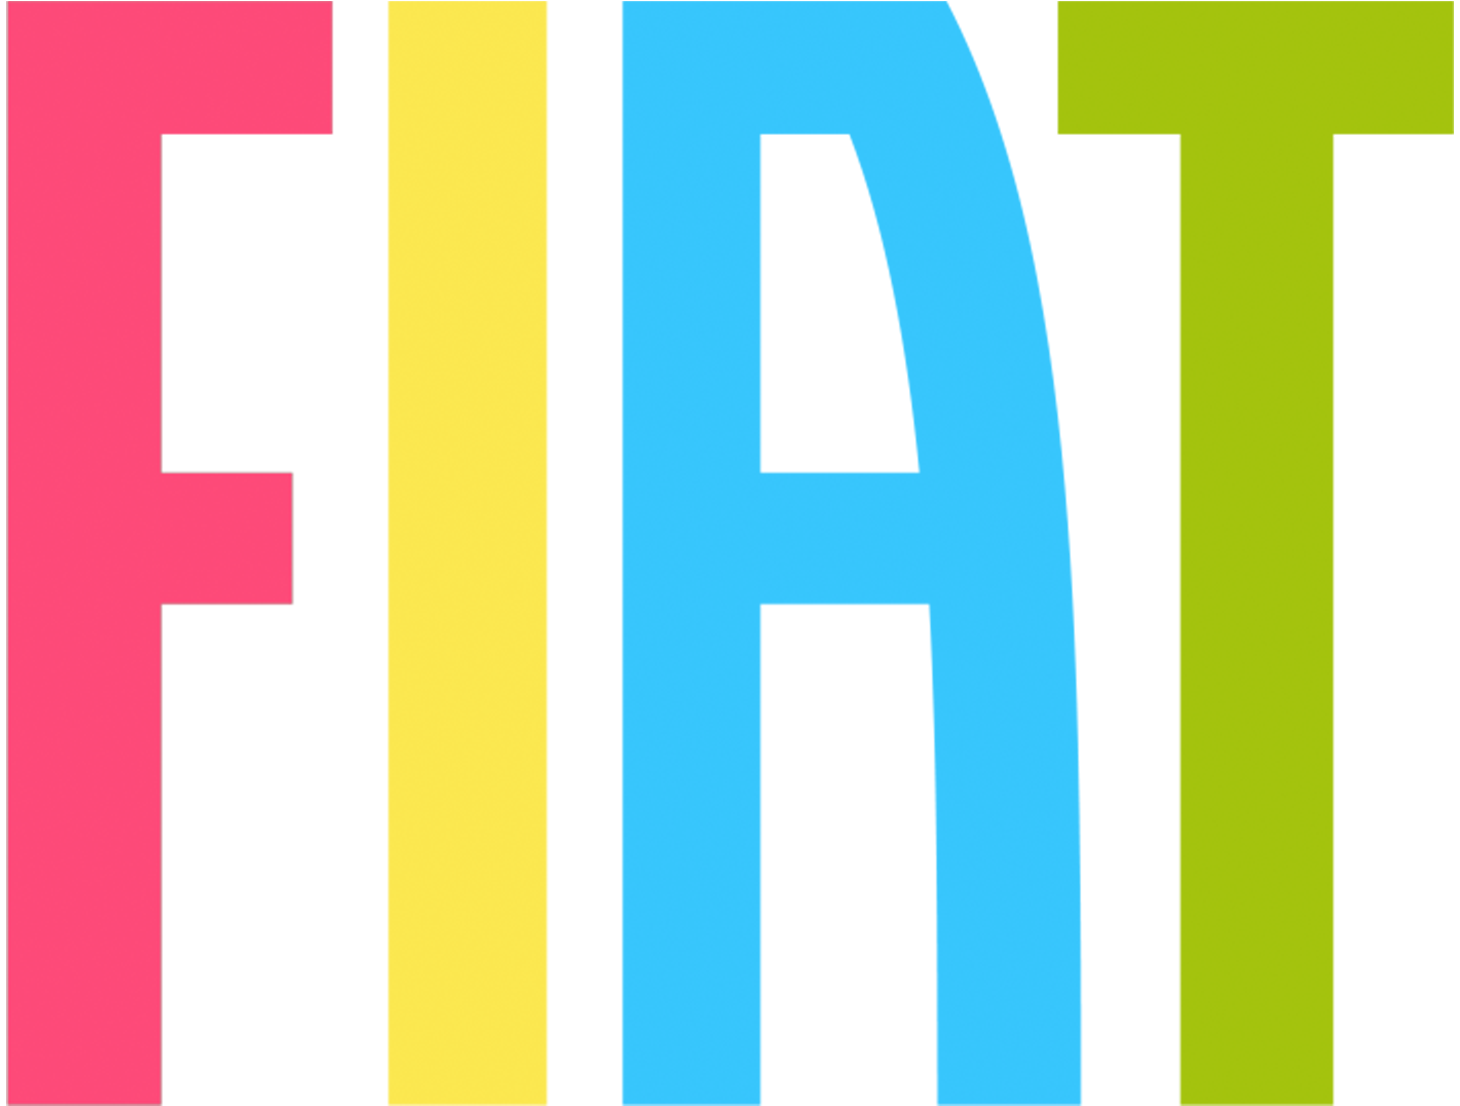 Fiat logo - Official Fiat Website